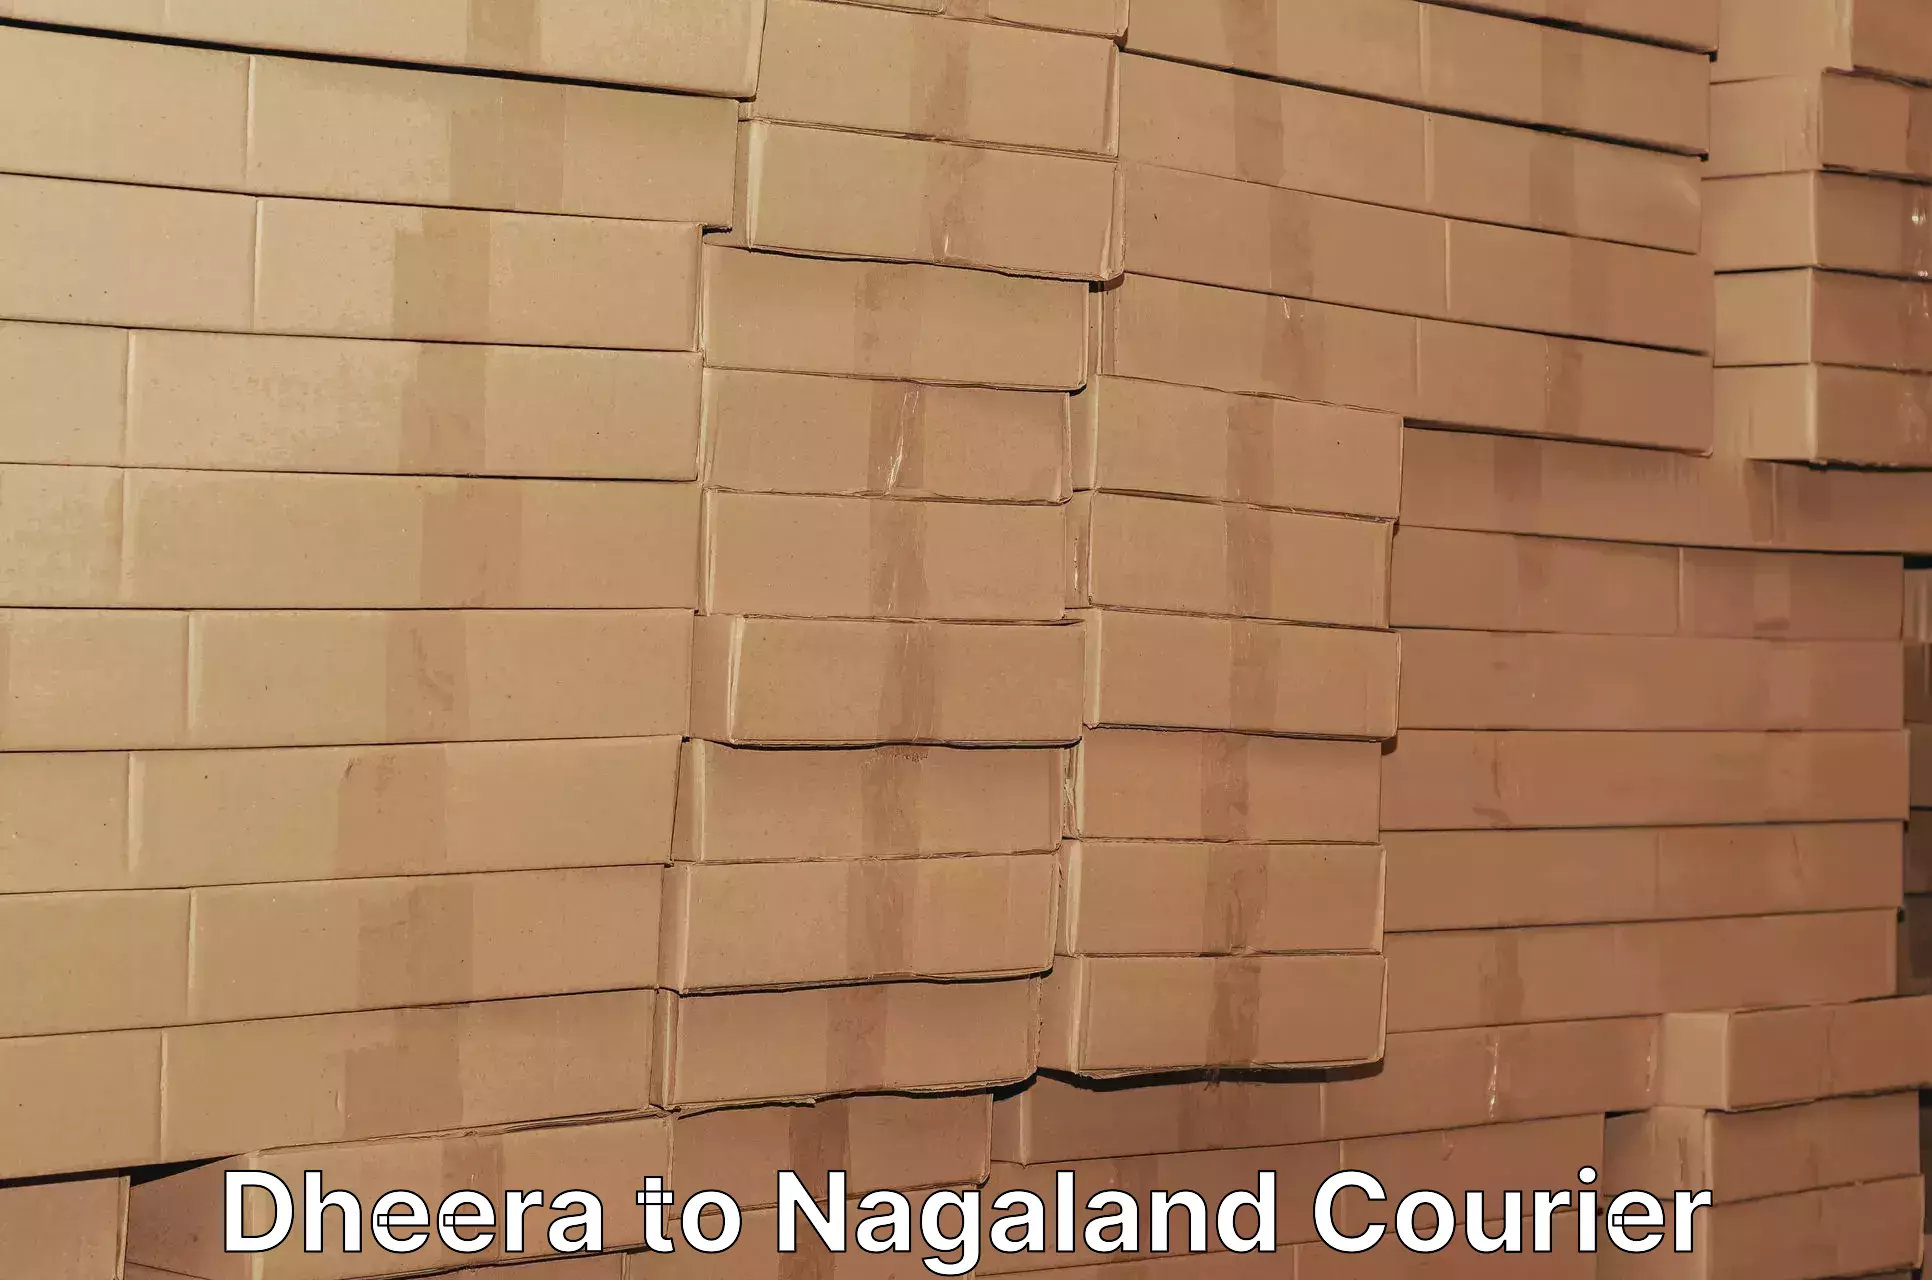 Logistics service provider Dheera to Nagaland